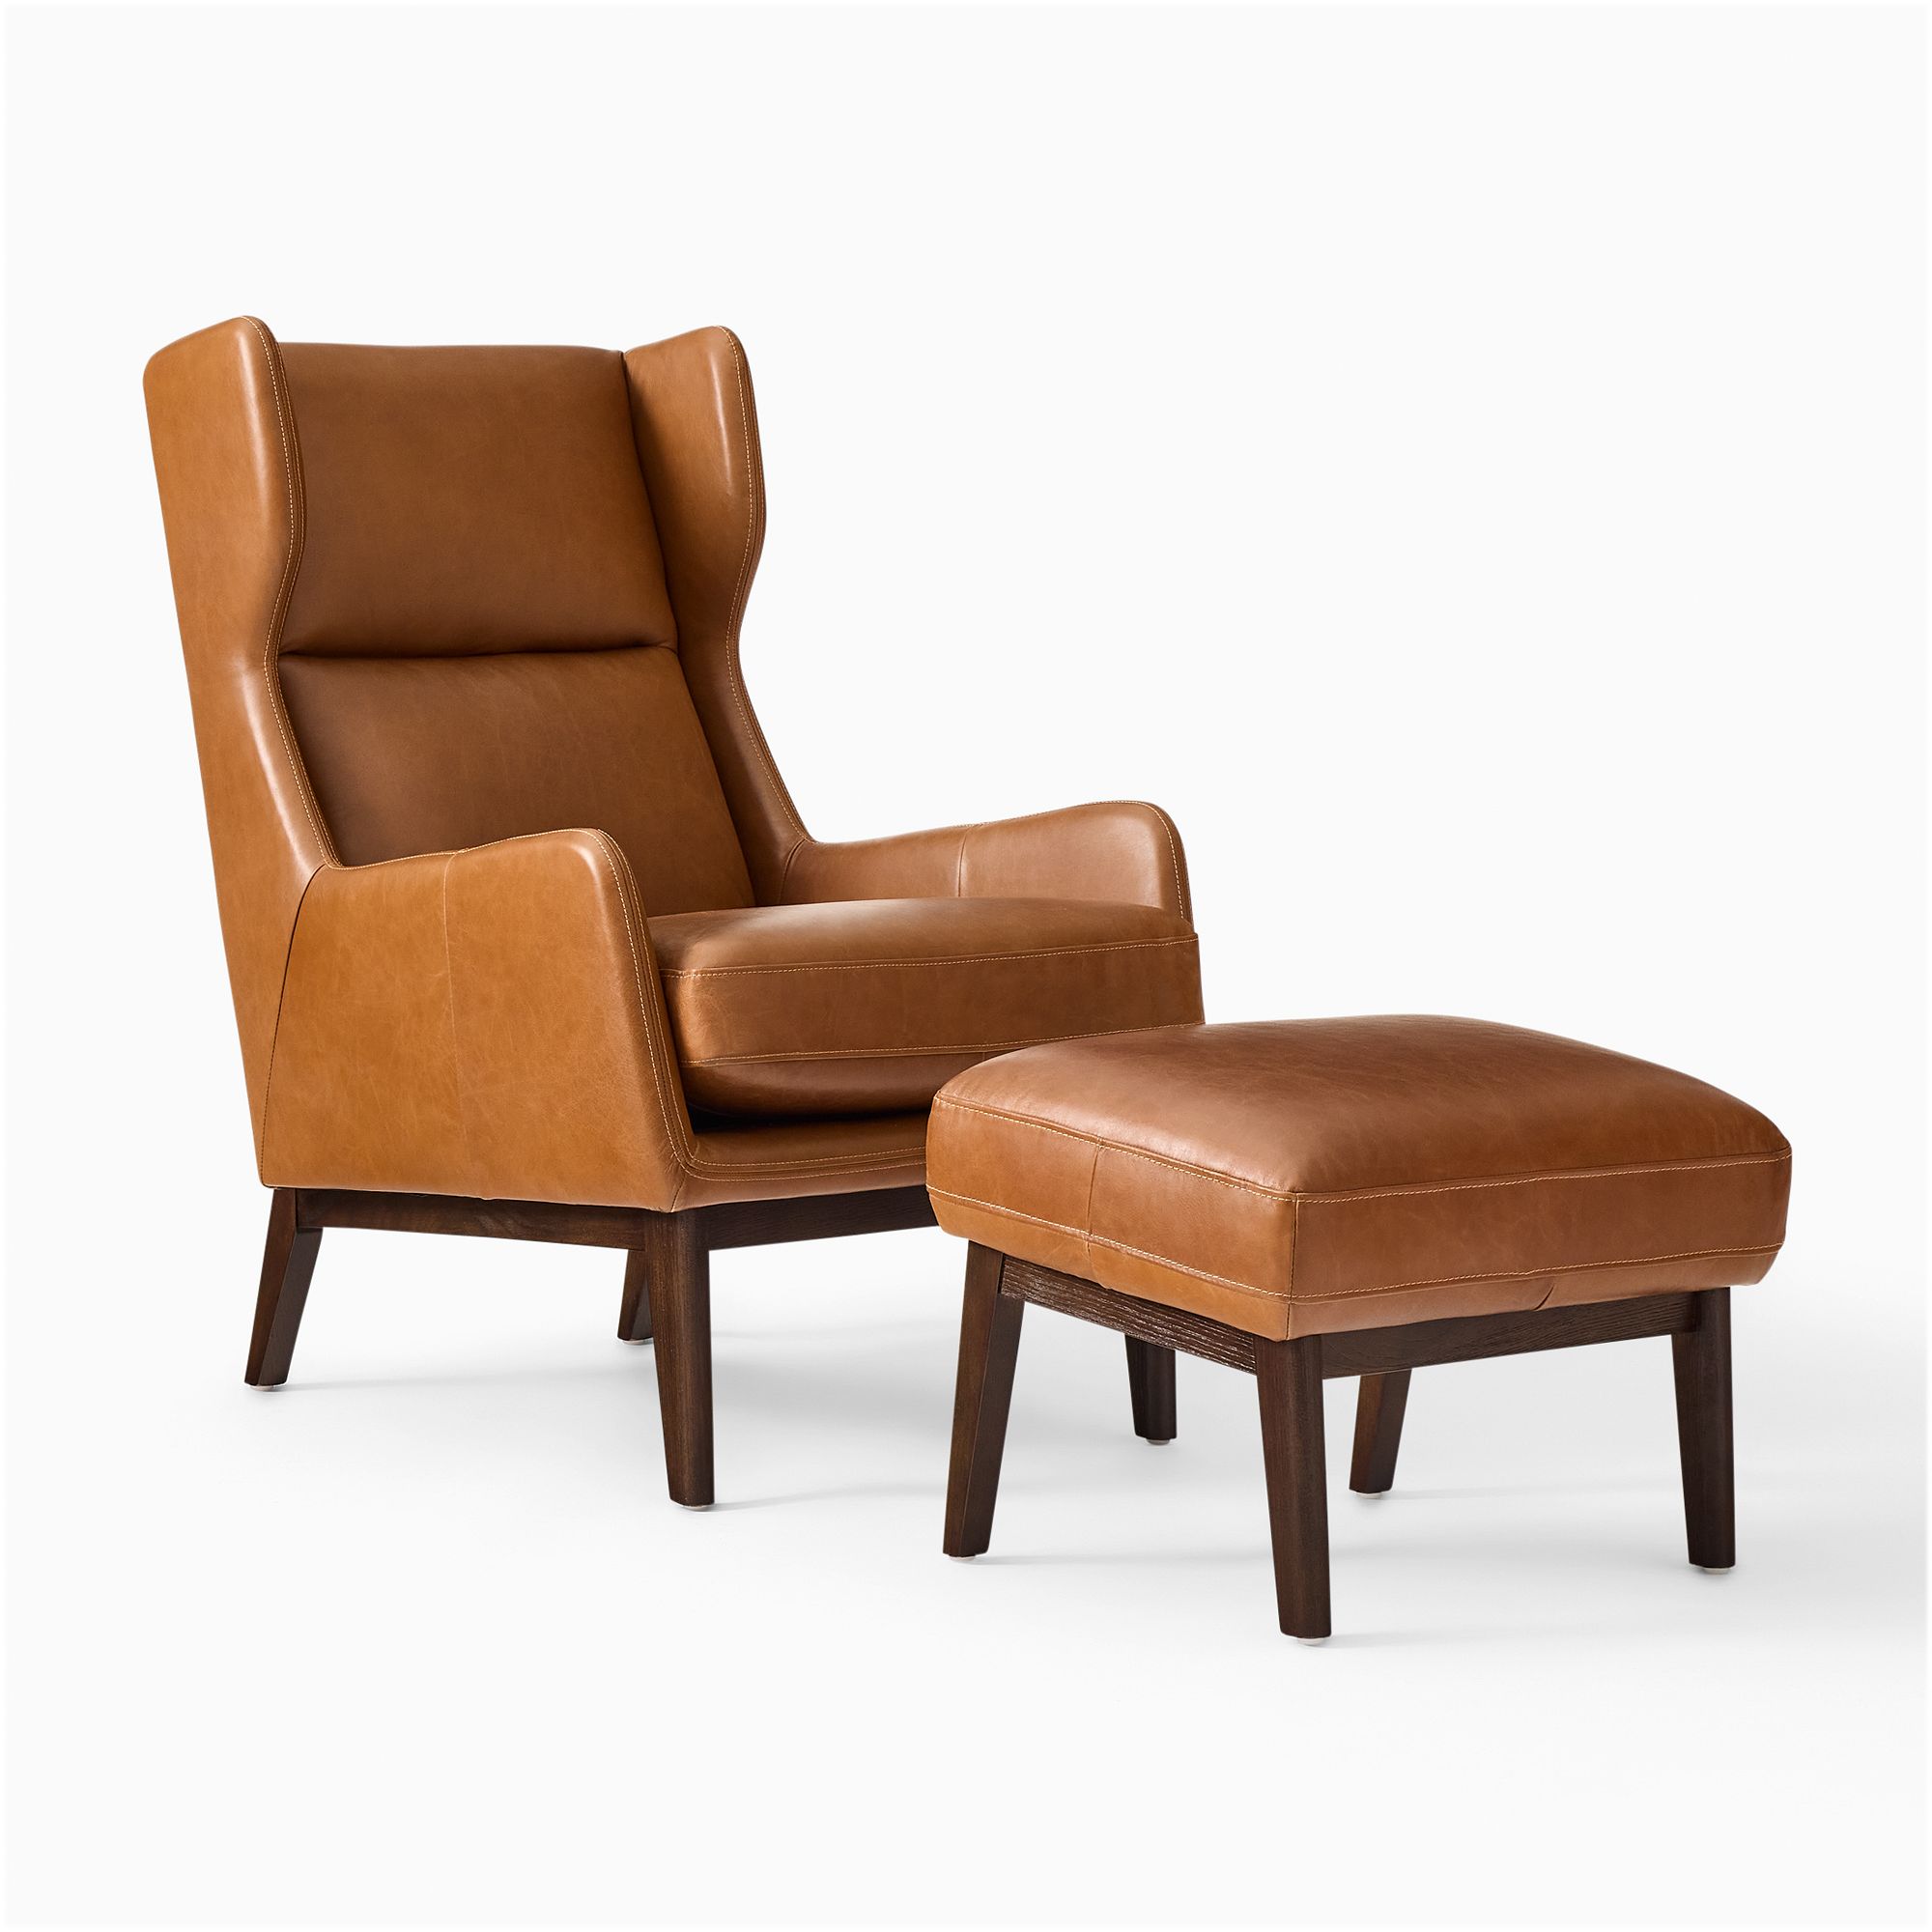 Ryder Leather Chair & Ottoman Set | West Elm